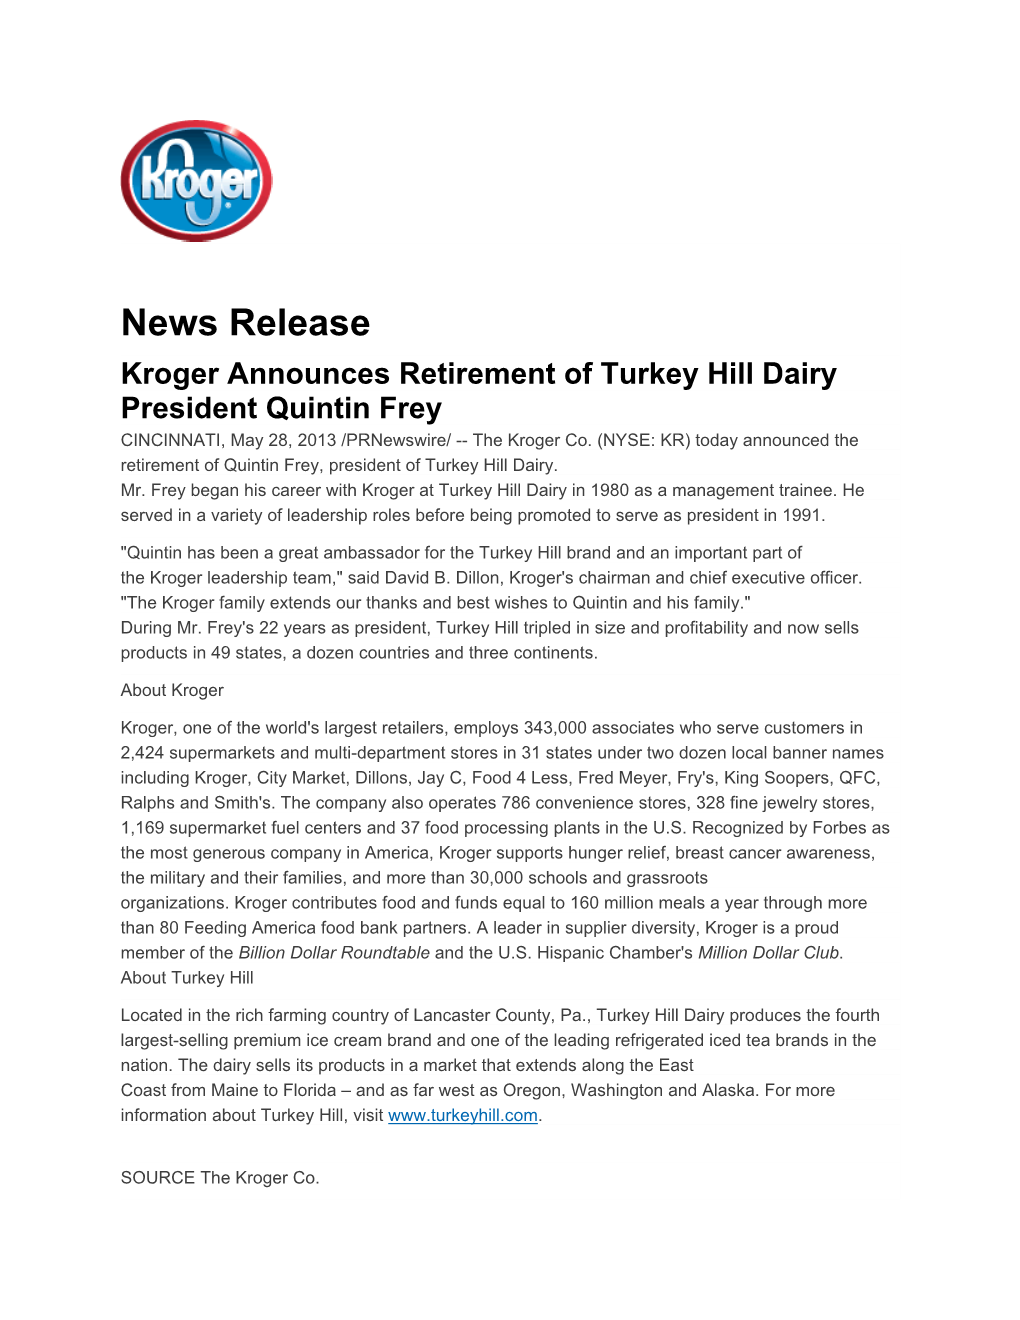 News Release Kroger Announces Retirement of Turkey Hill Dairy President Quintin Frey CINCINNATI, May 28, 2013 /Prnewswire/ -- the Kroger Co